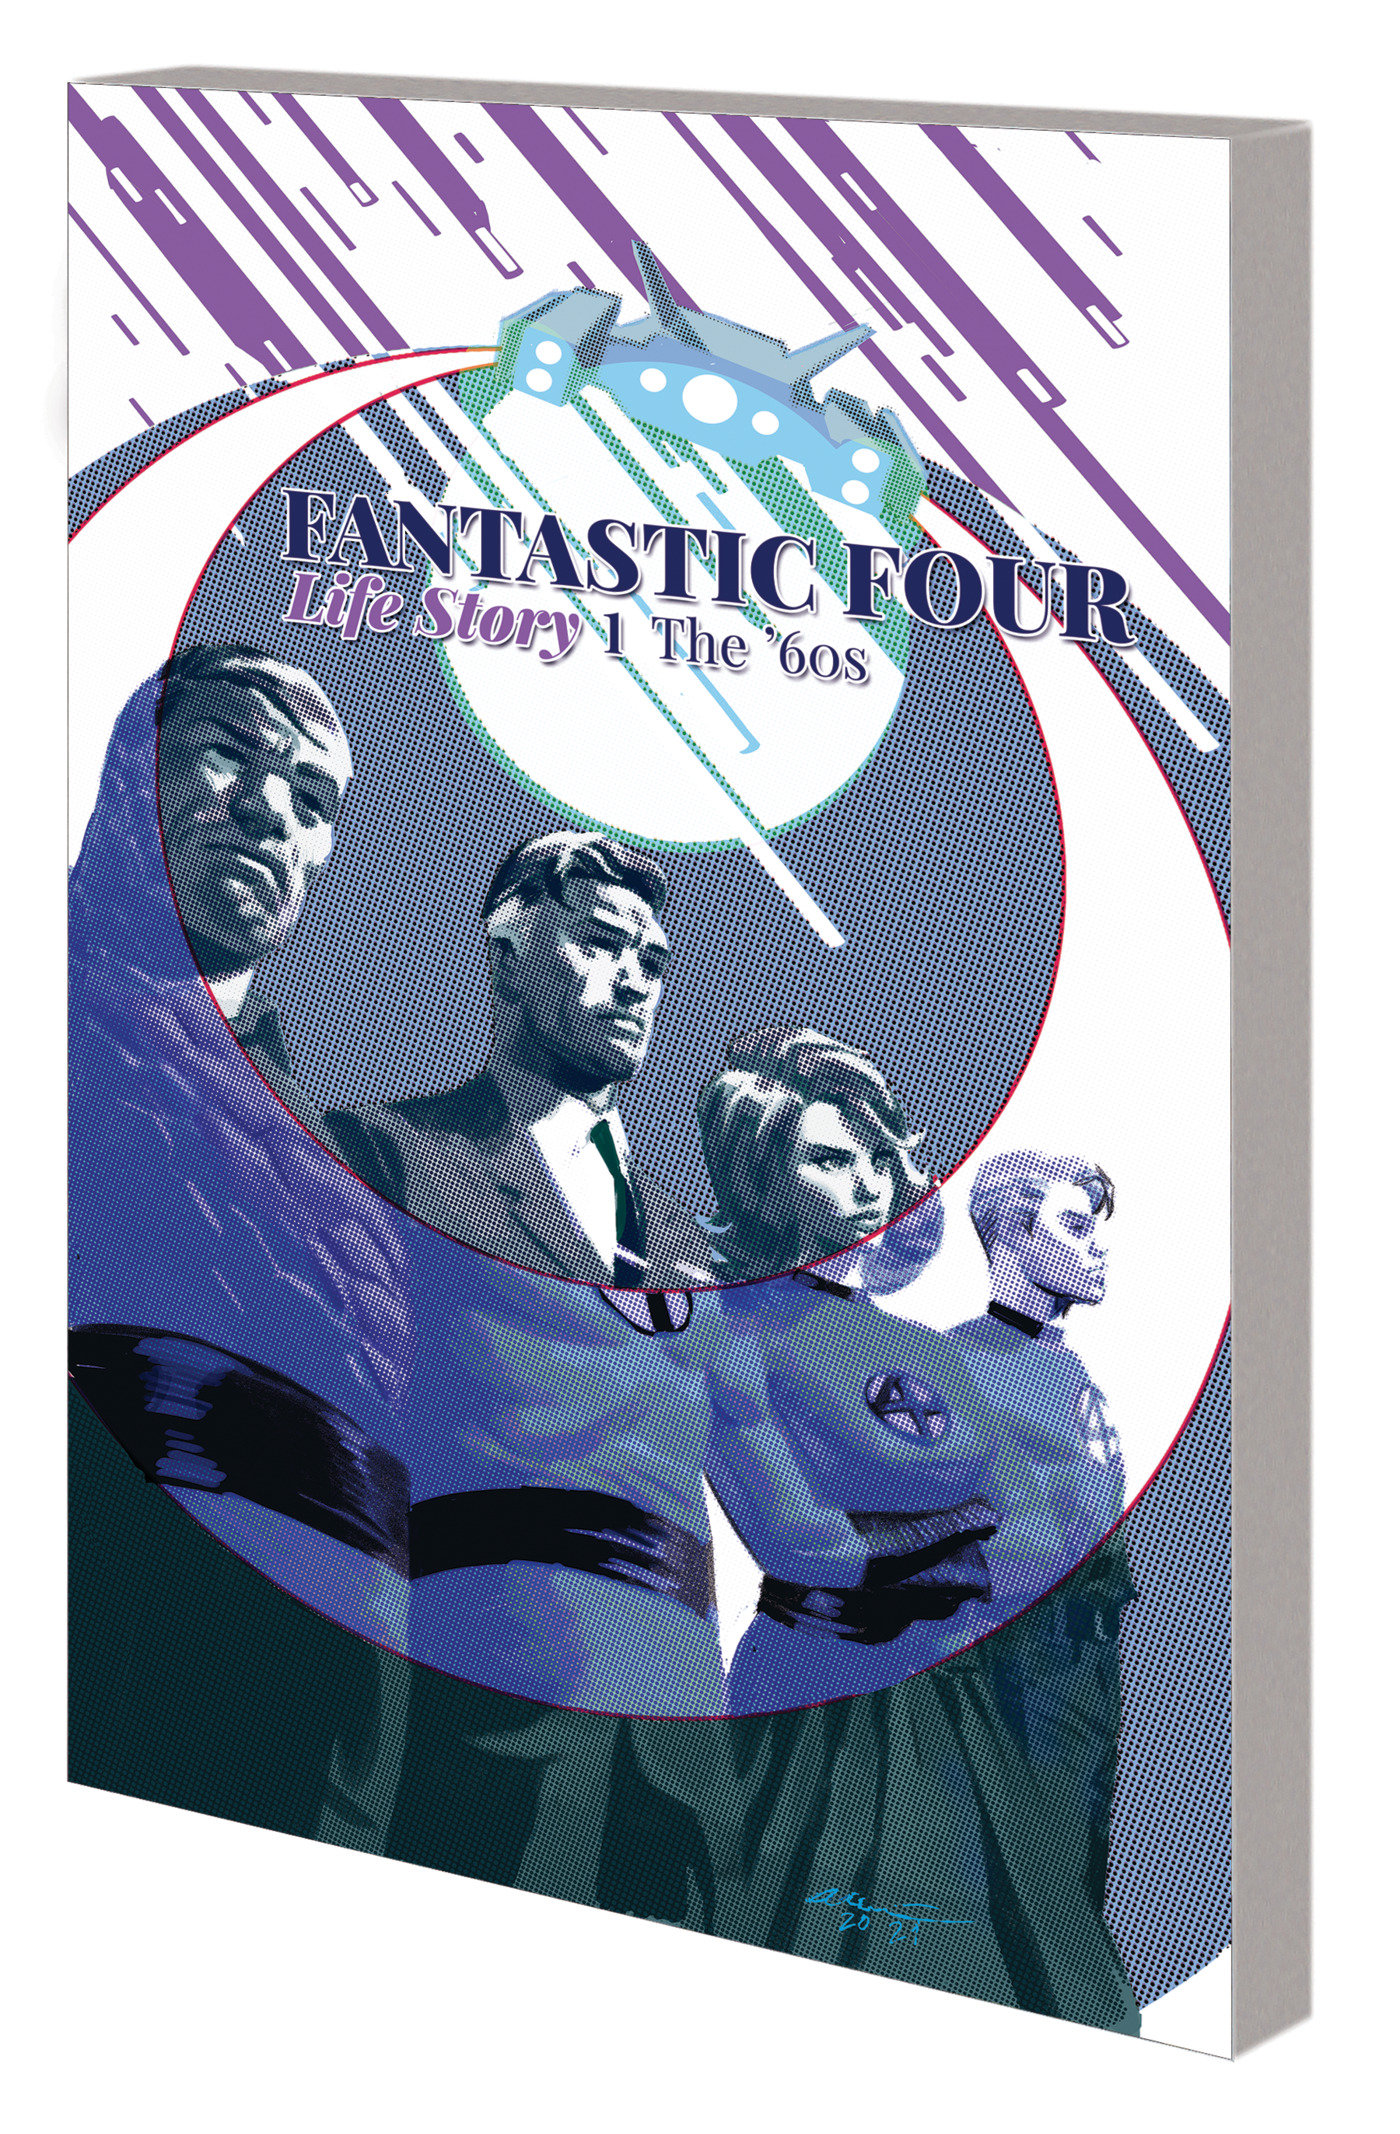 Fantastic Four Graphic Novel Life Story